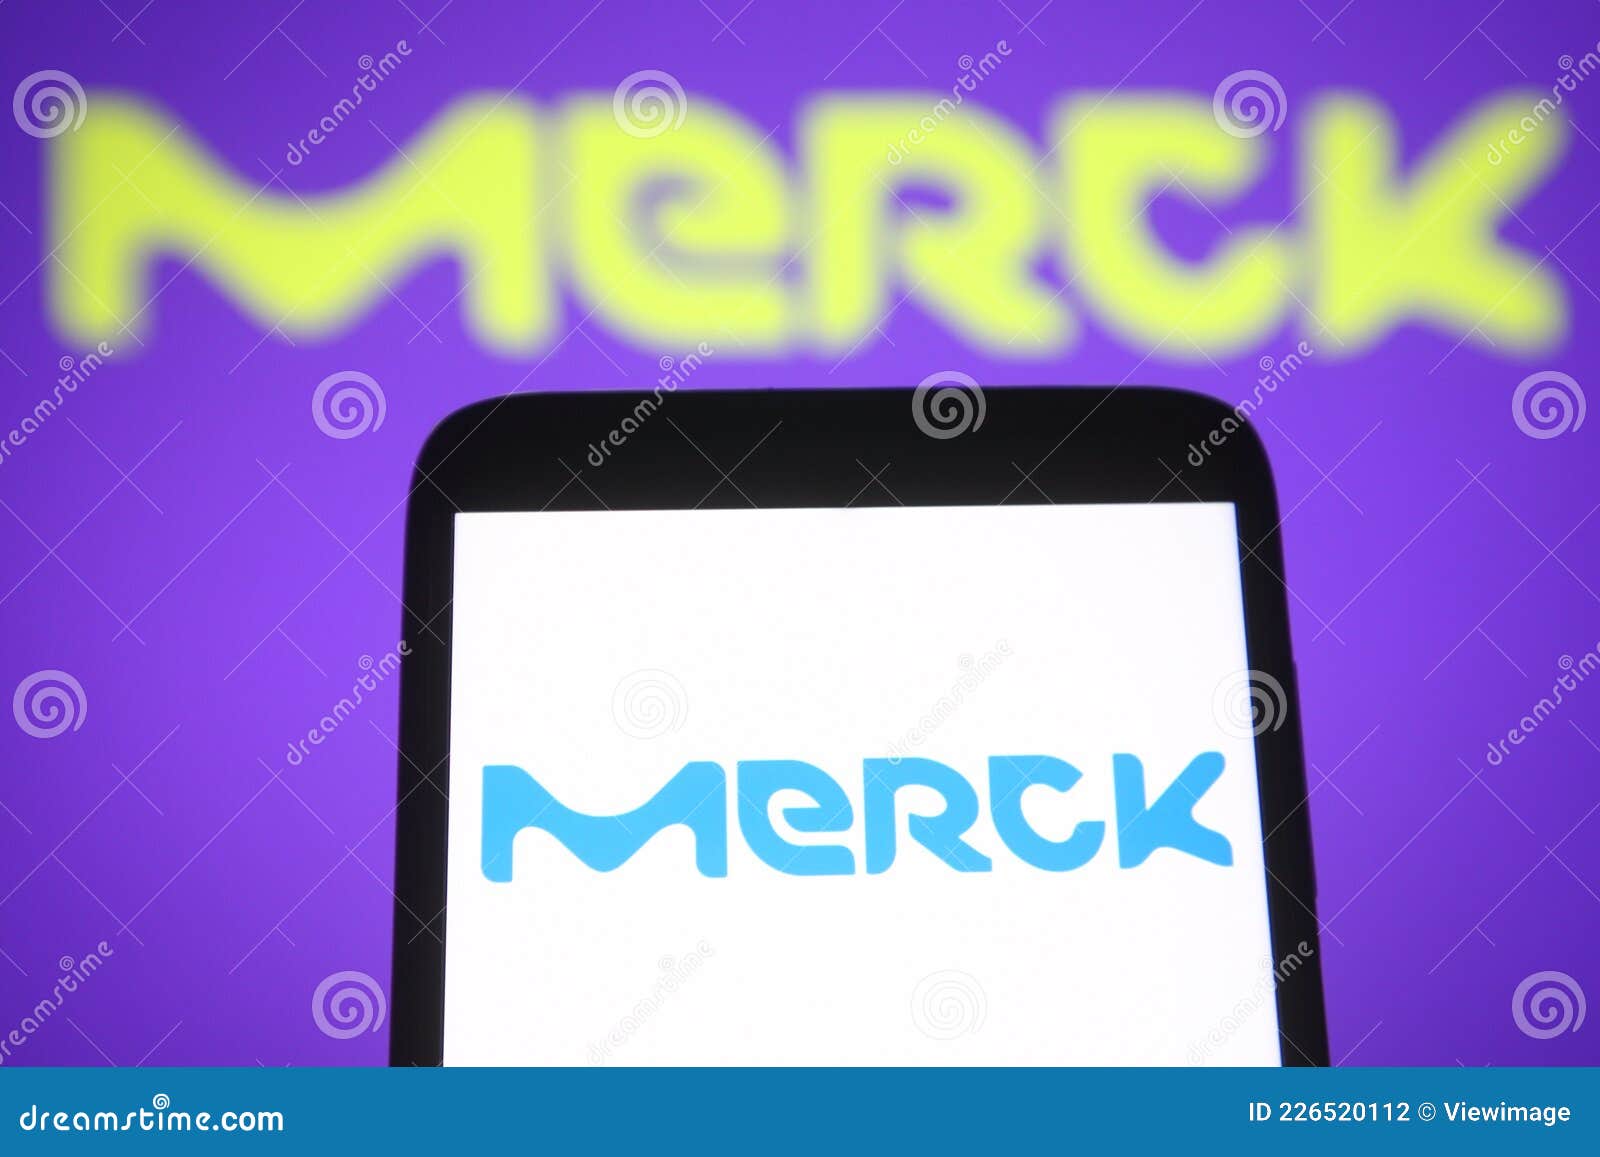 merck-logo-editorial-photography-image-of-green-applications-226520112